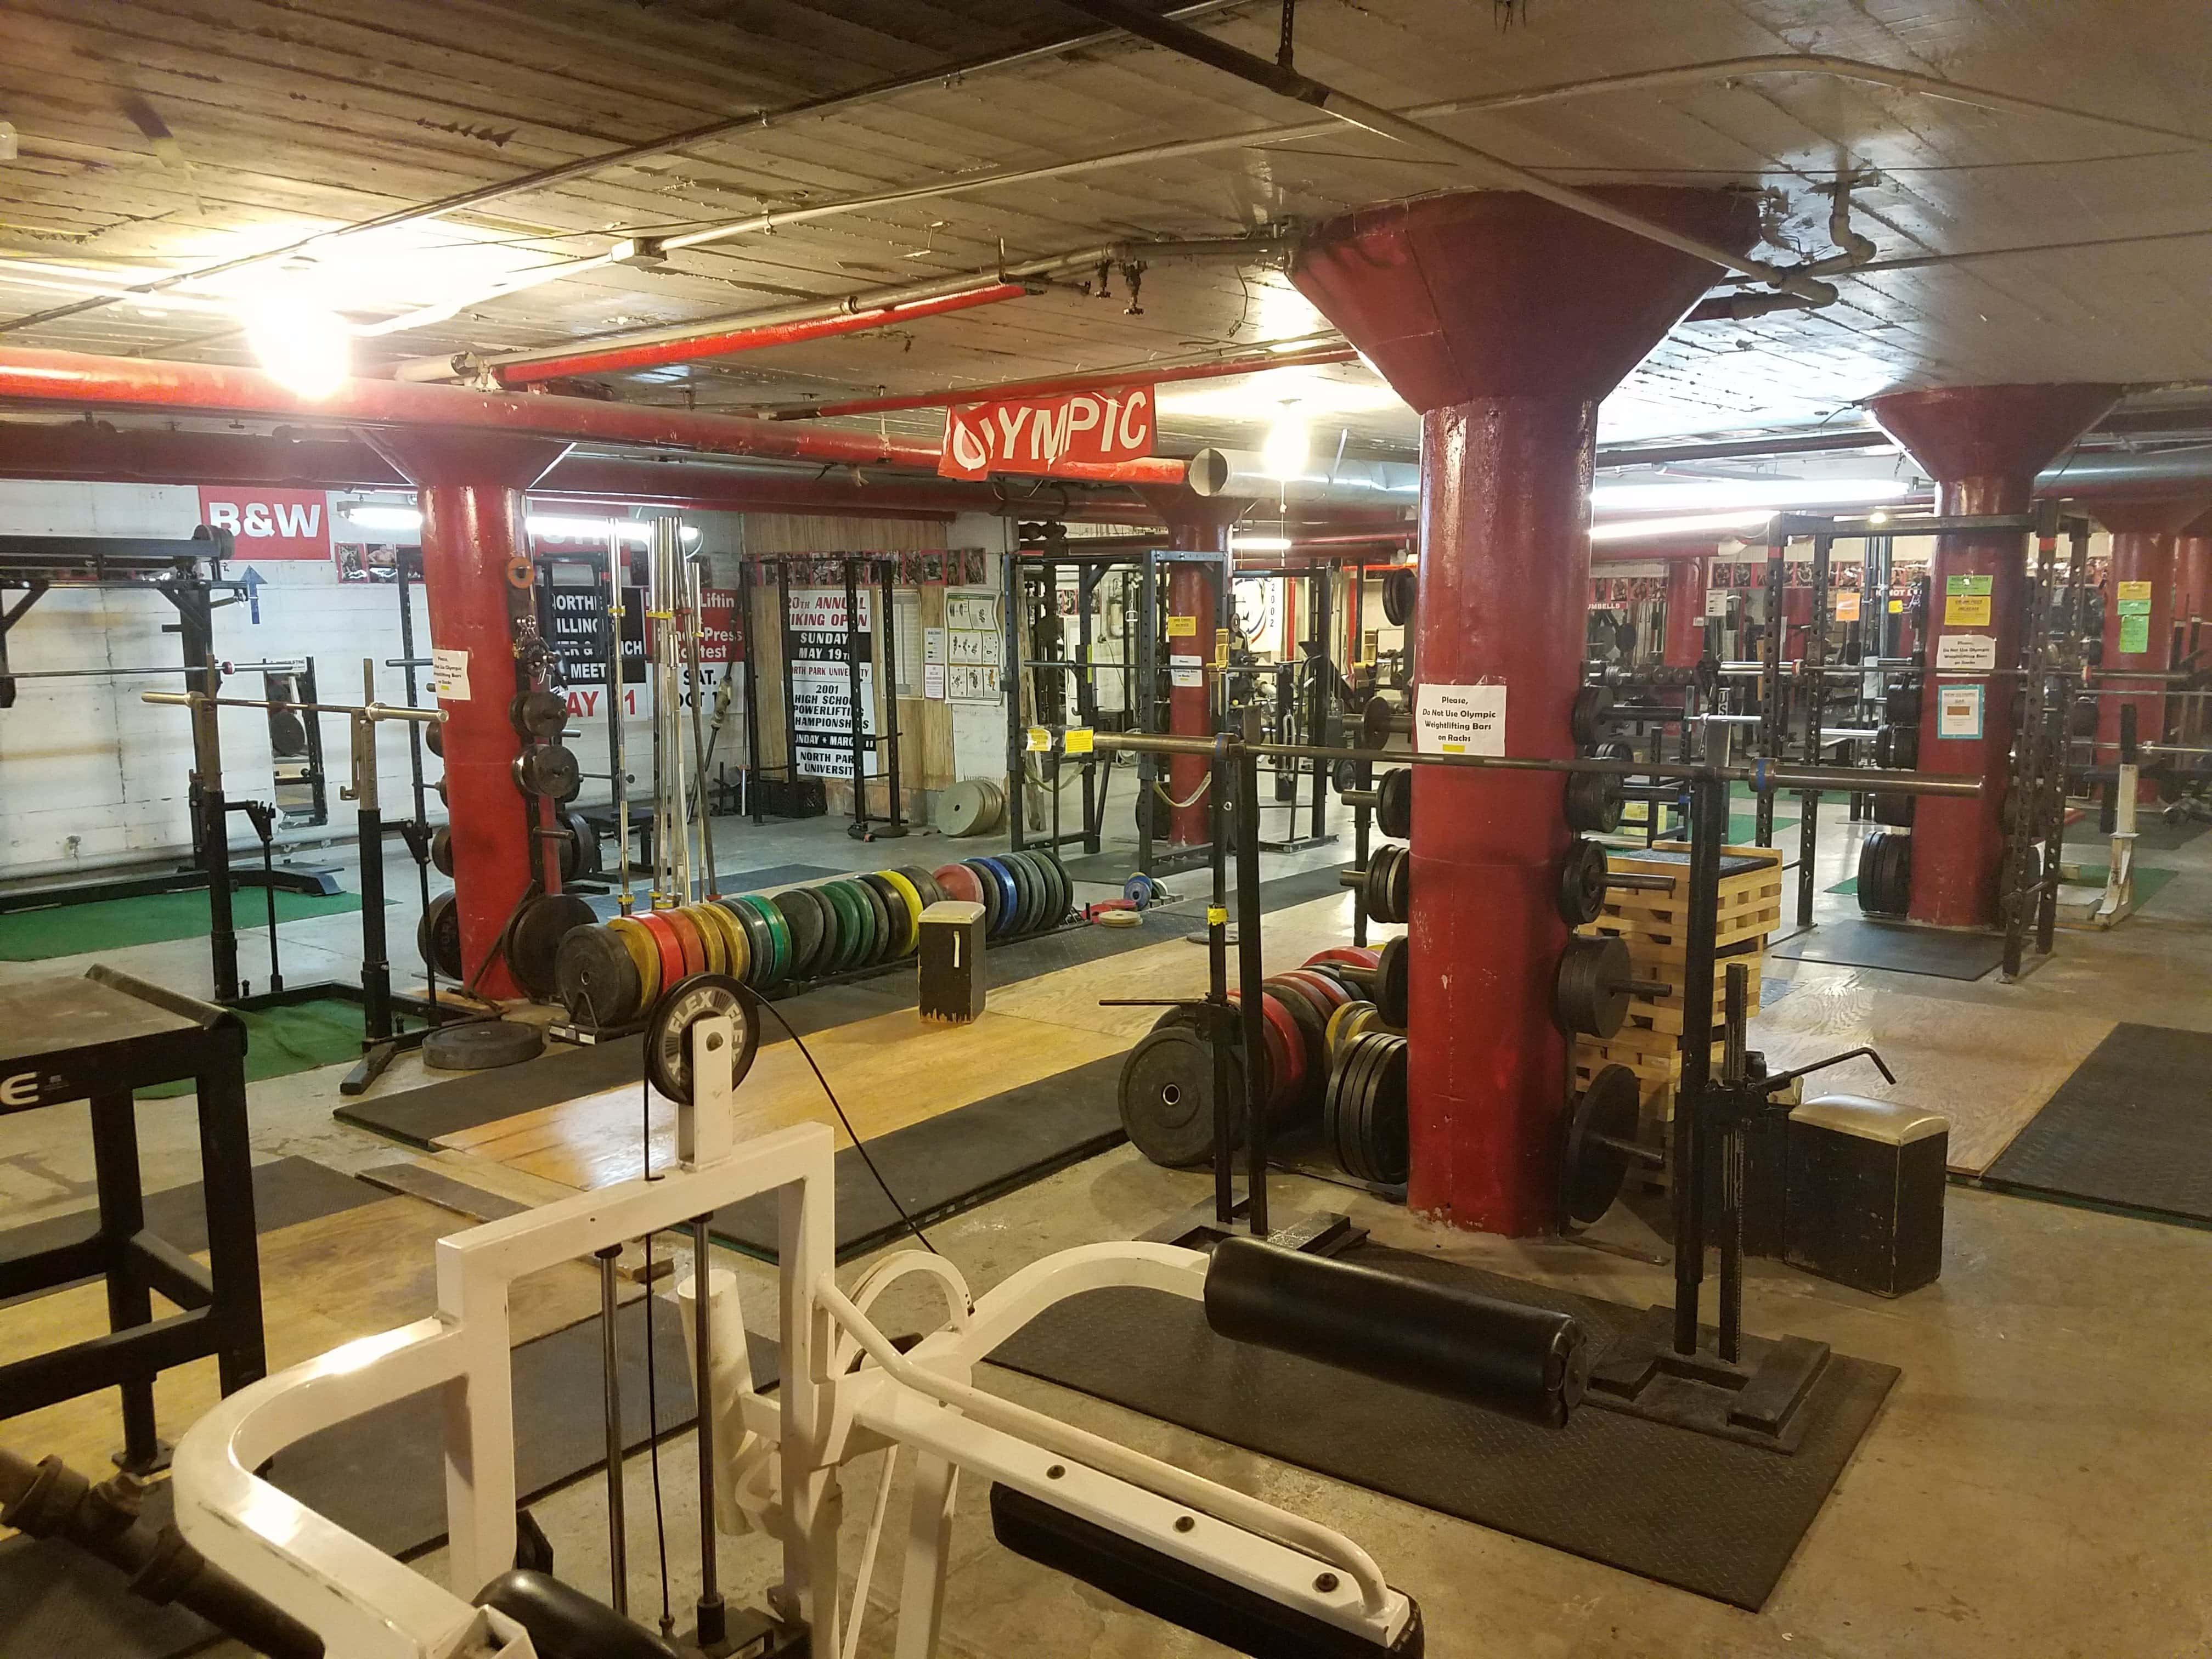 B&W Gym - Chicago, IL, US, good workouts